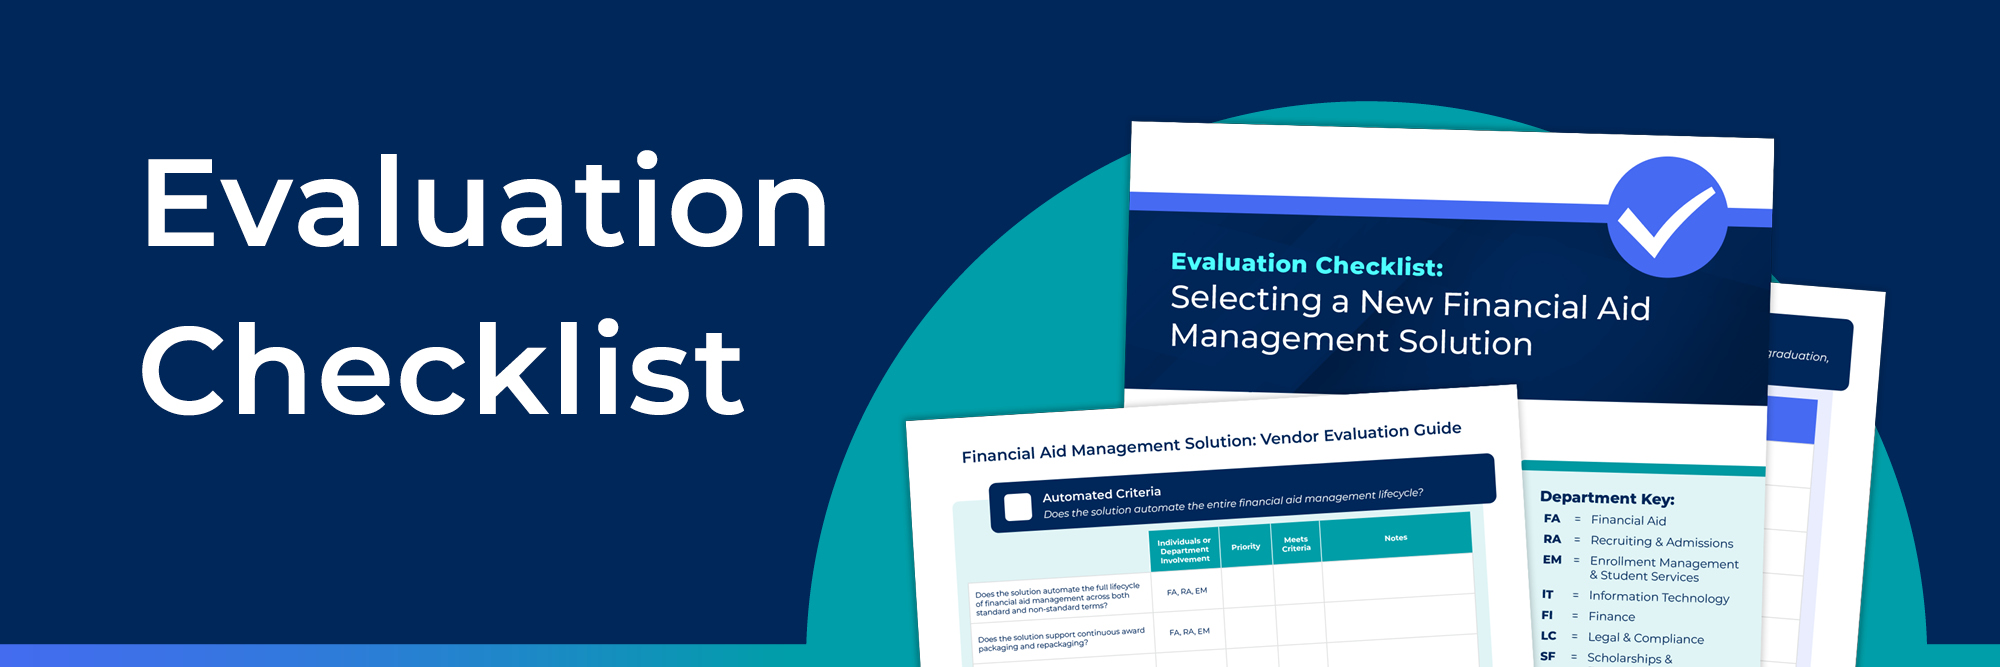 Evaluation Checklist header